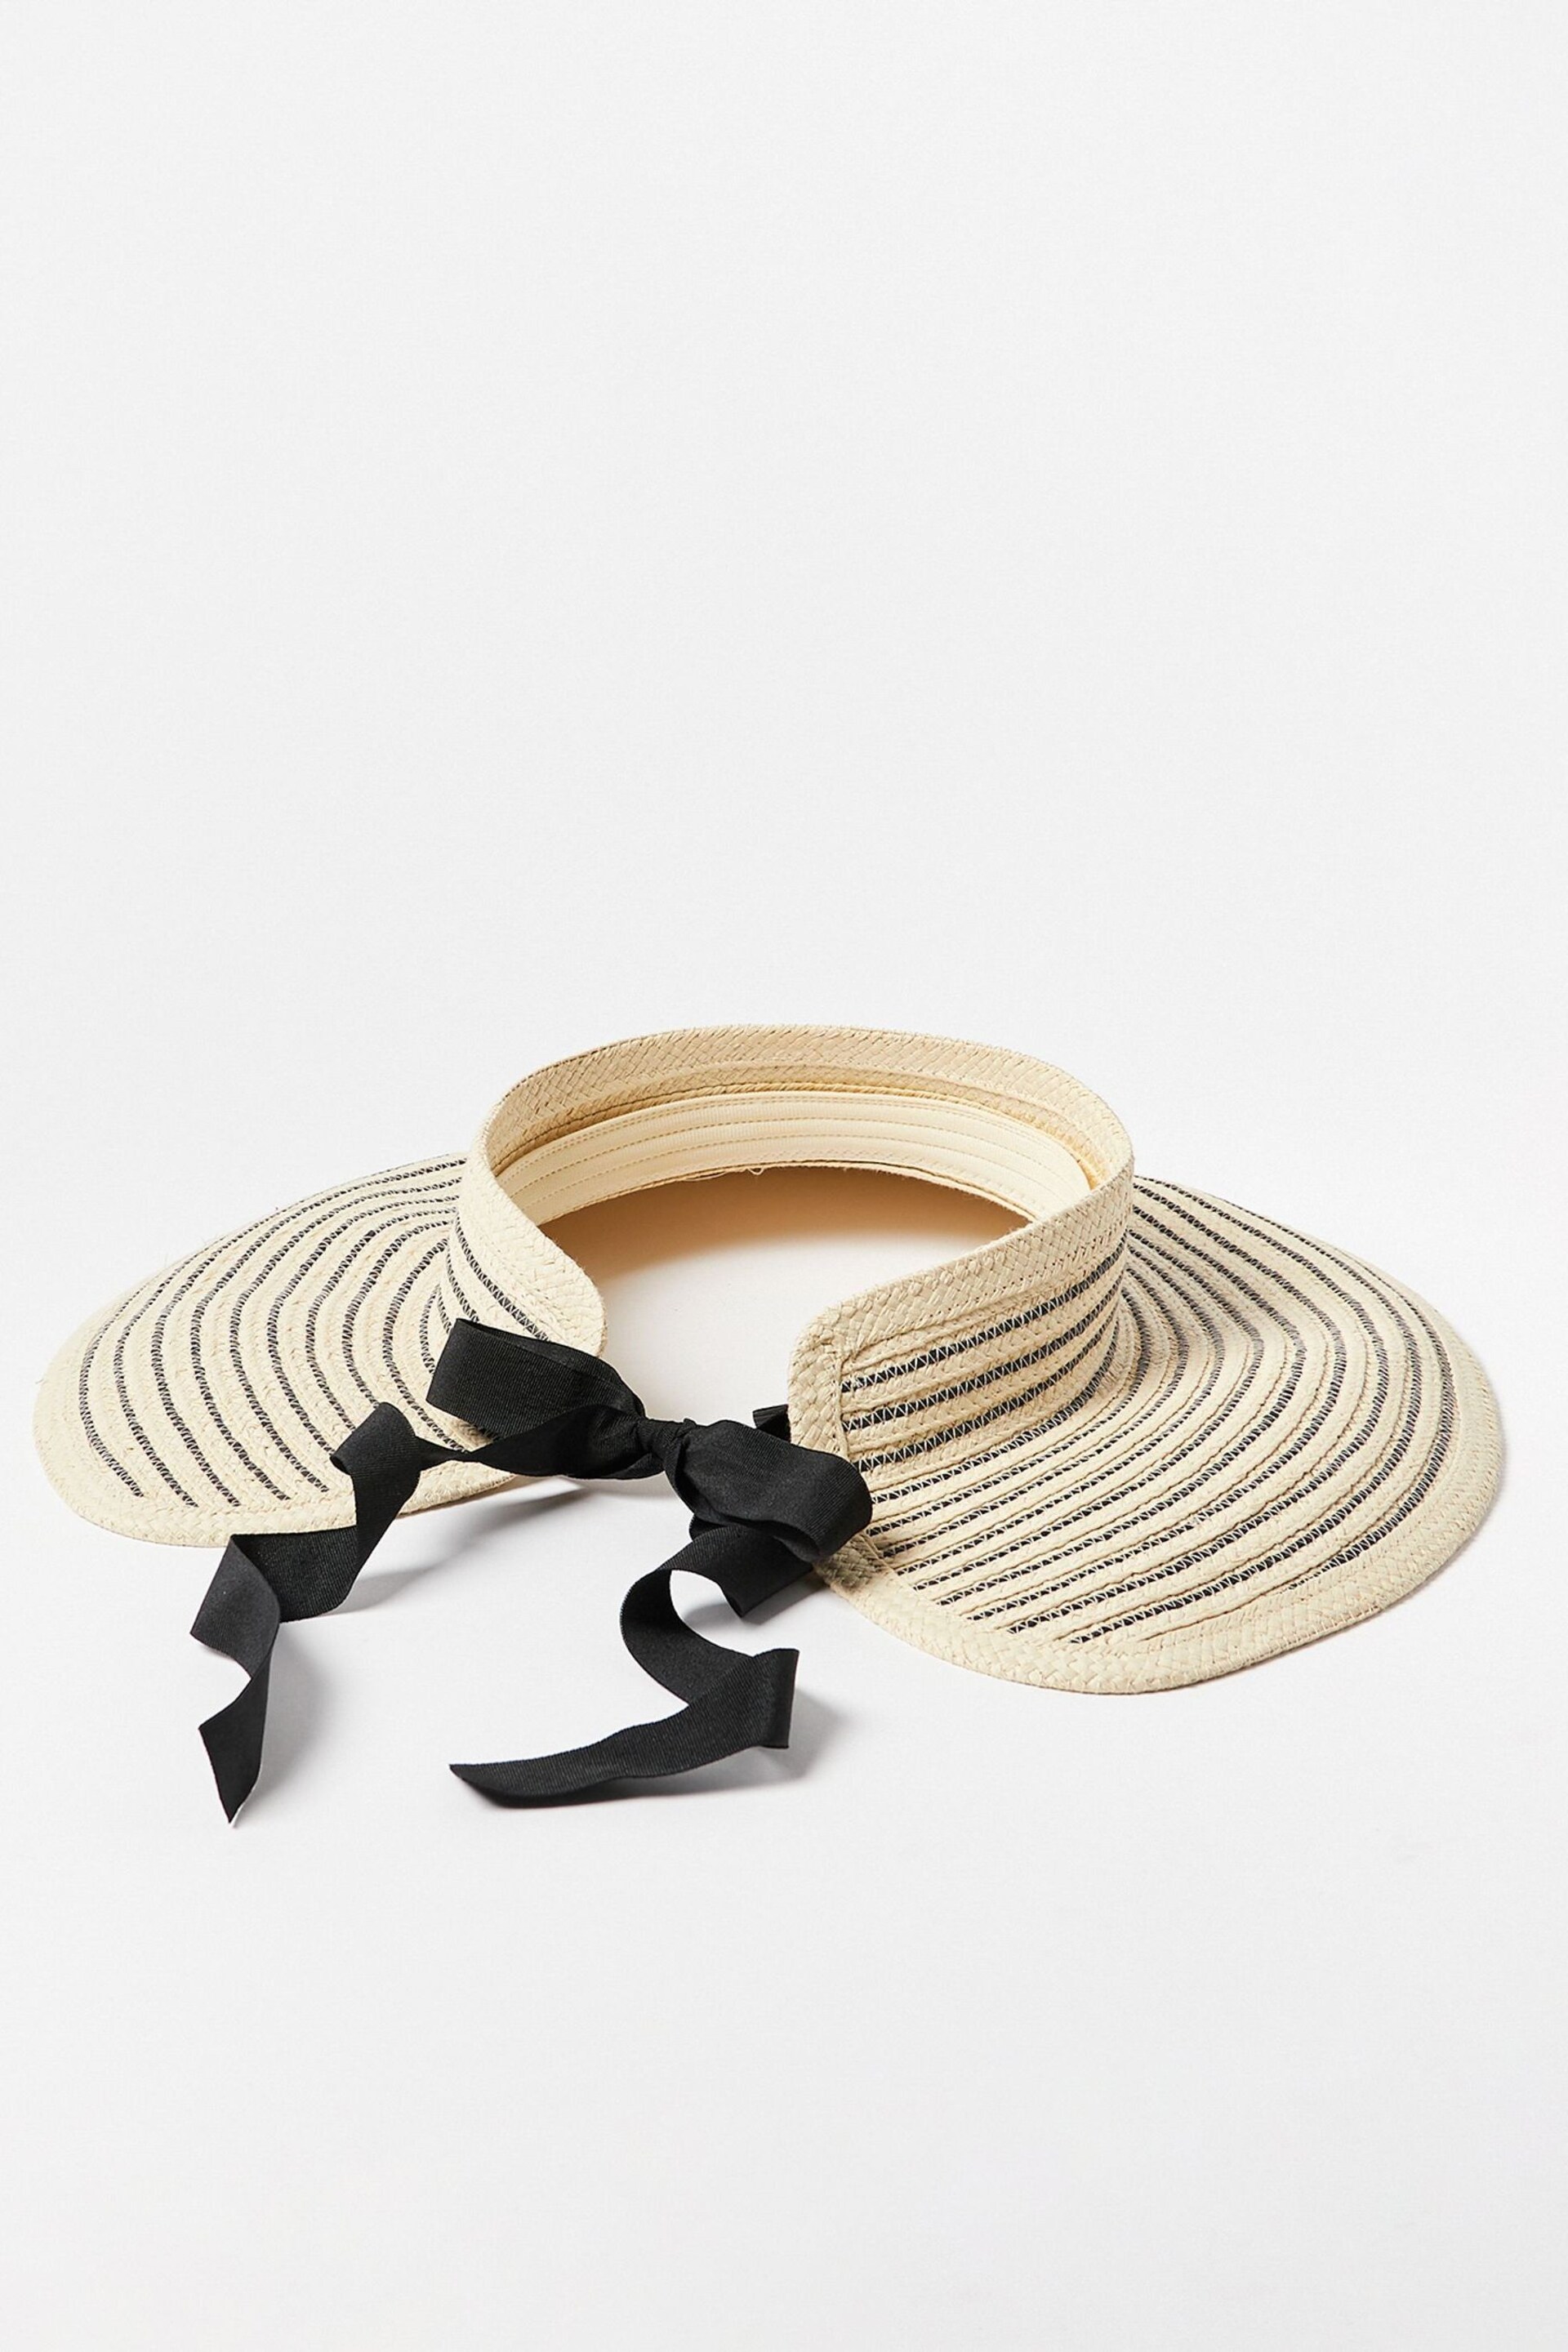 Oliver Bonas Striped Foldable Visor White Hat - Image 3 of 7